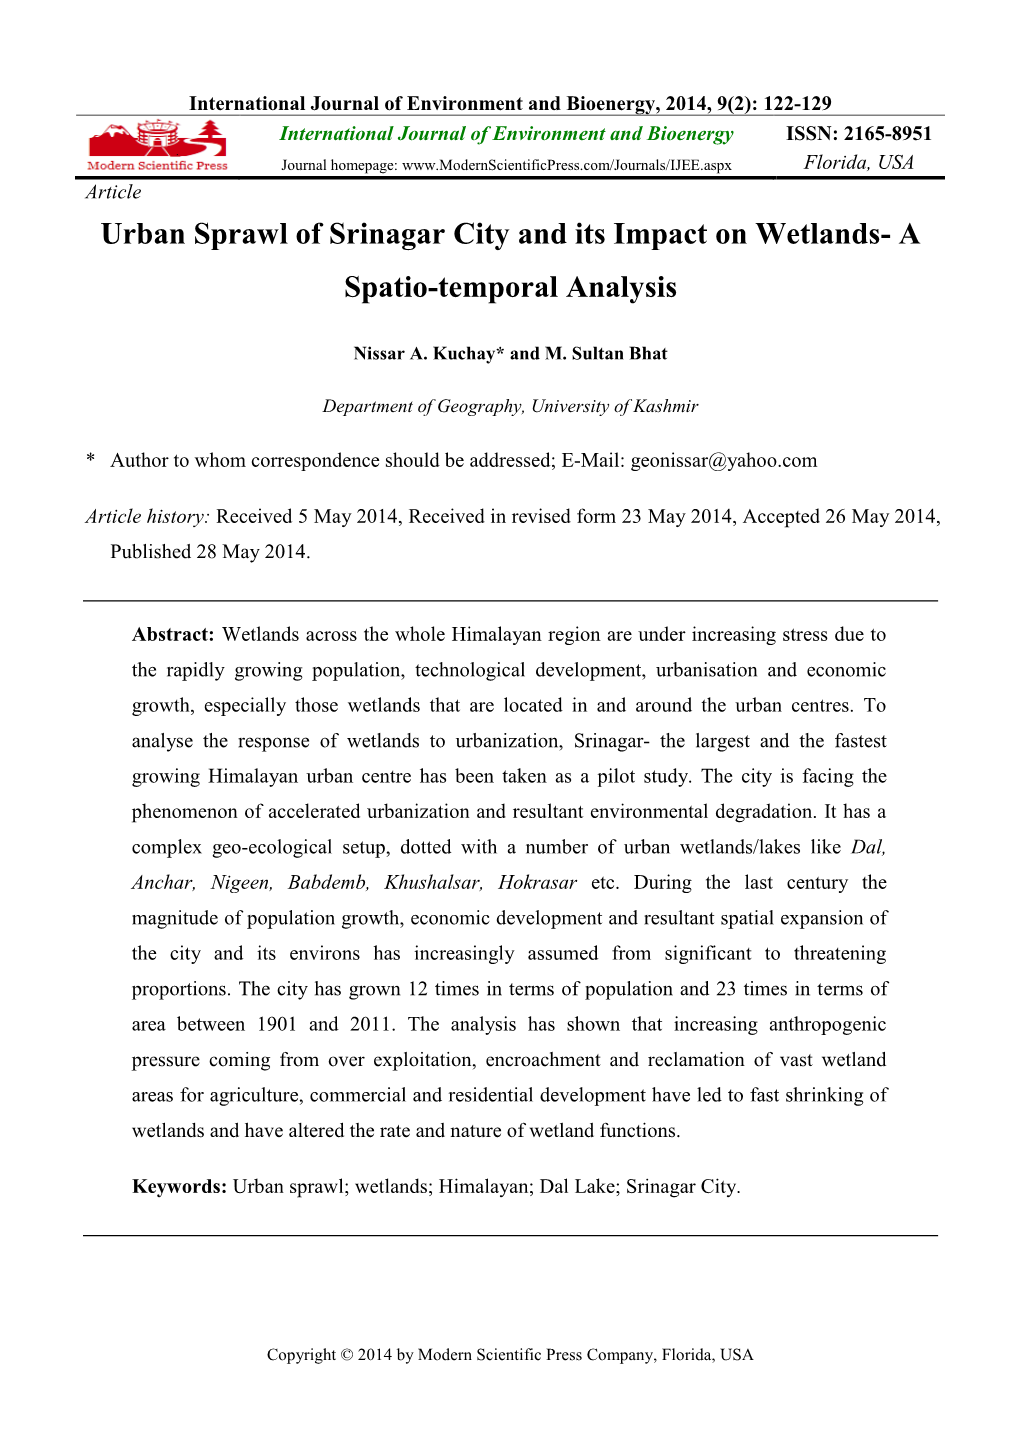 Urban Sprawl of Srinagar City and Its Impact on Wetlands- a Spatio-Temporal Analysis